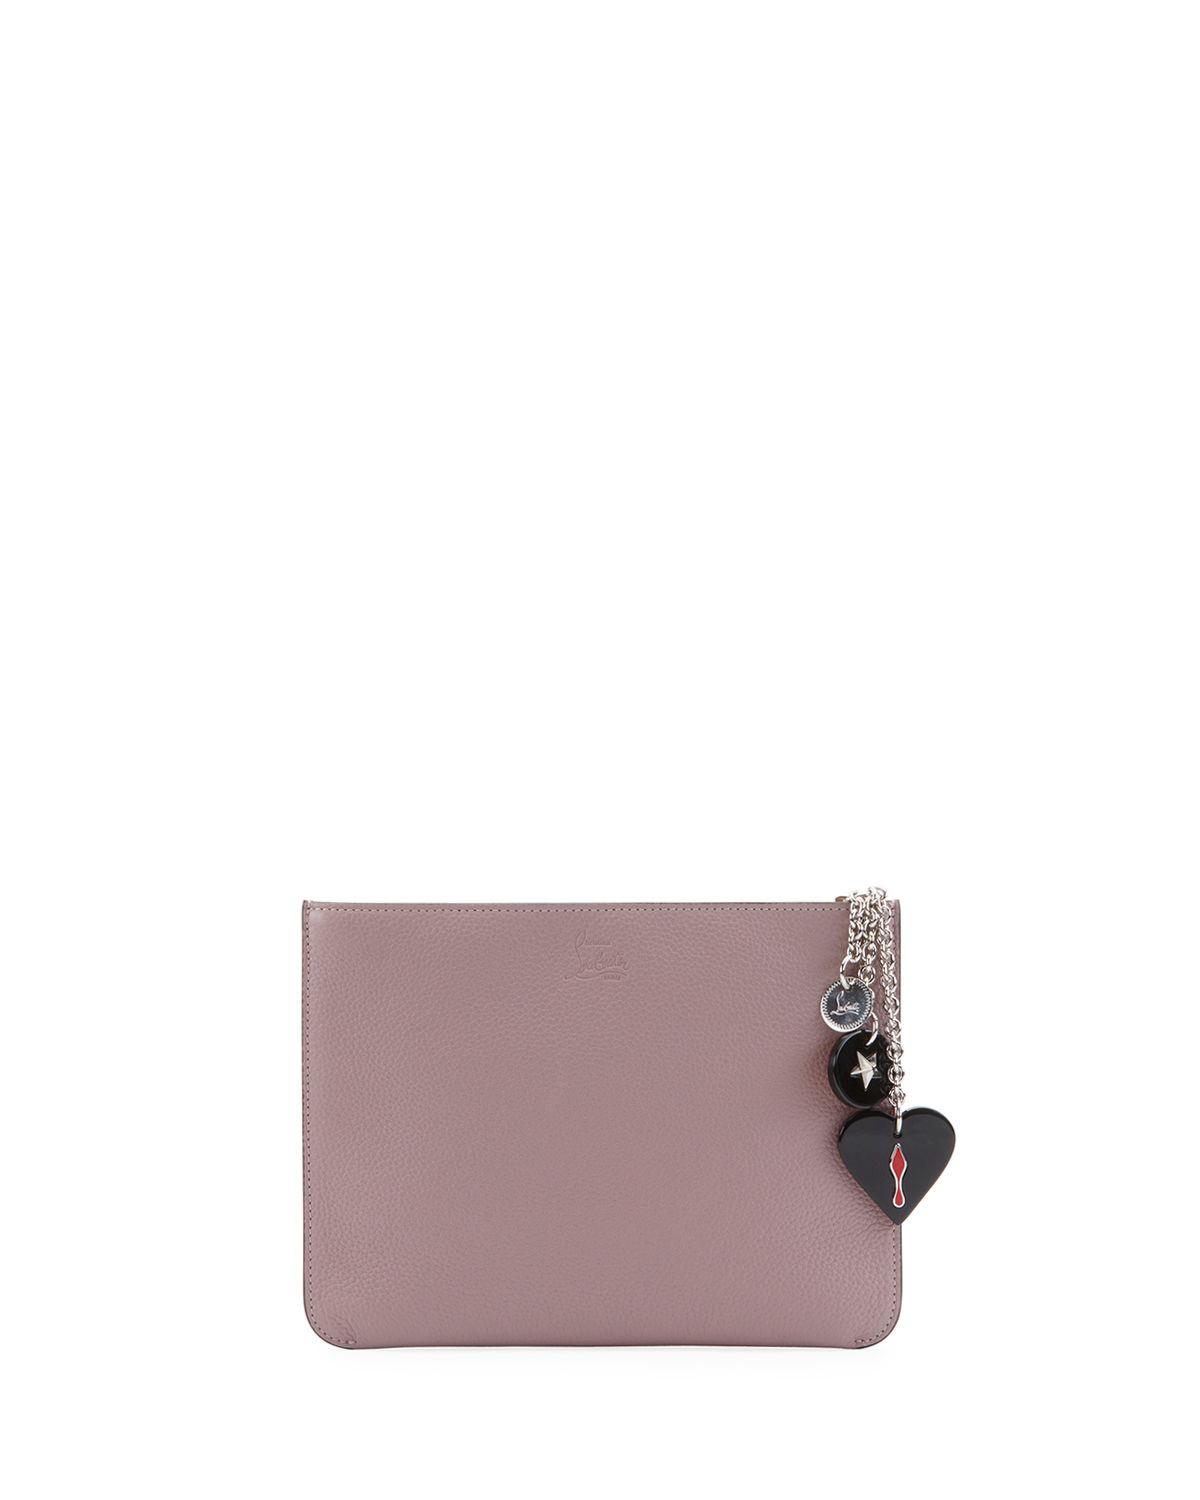 Lyst - Christian Louboutin Loubicute Calf Empire Charms Clutch Bag in Pink